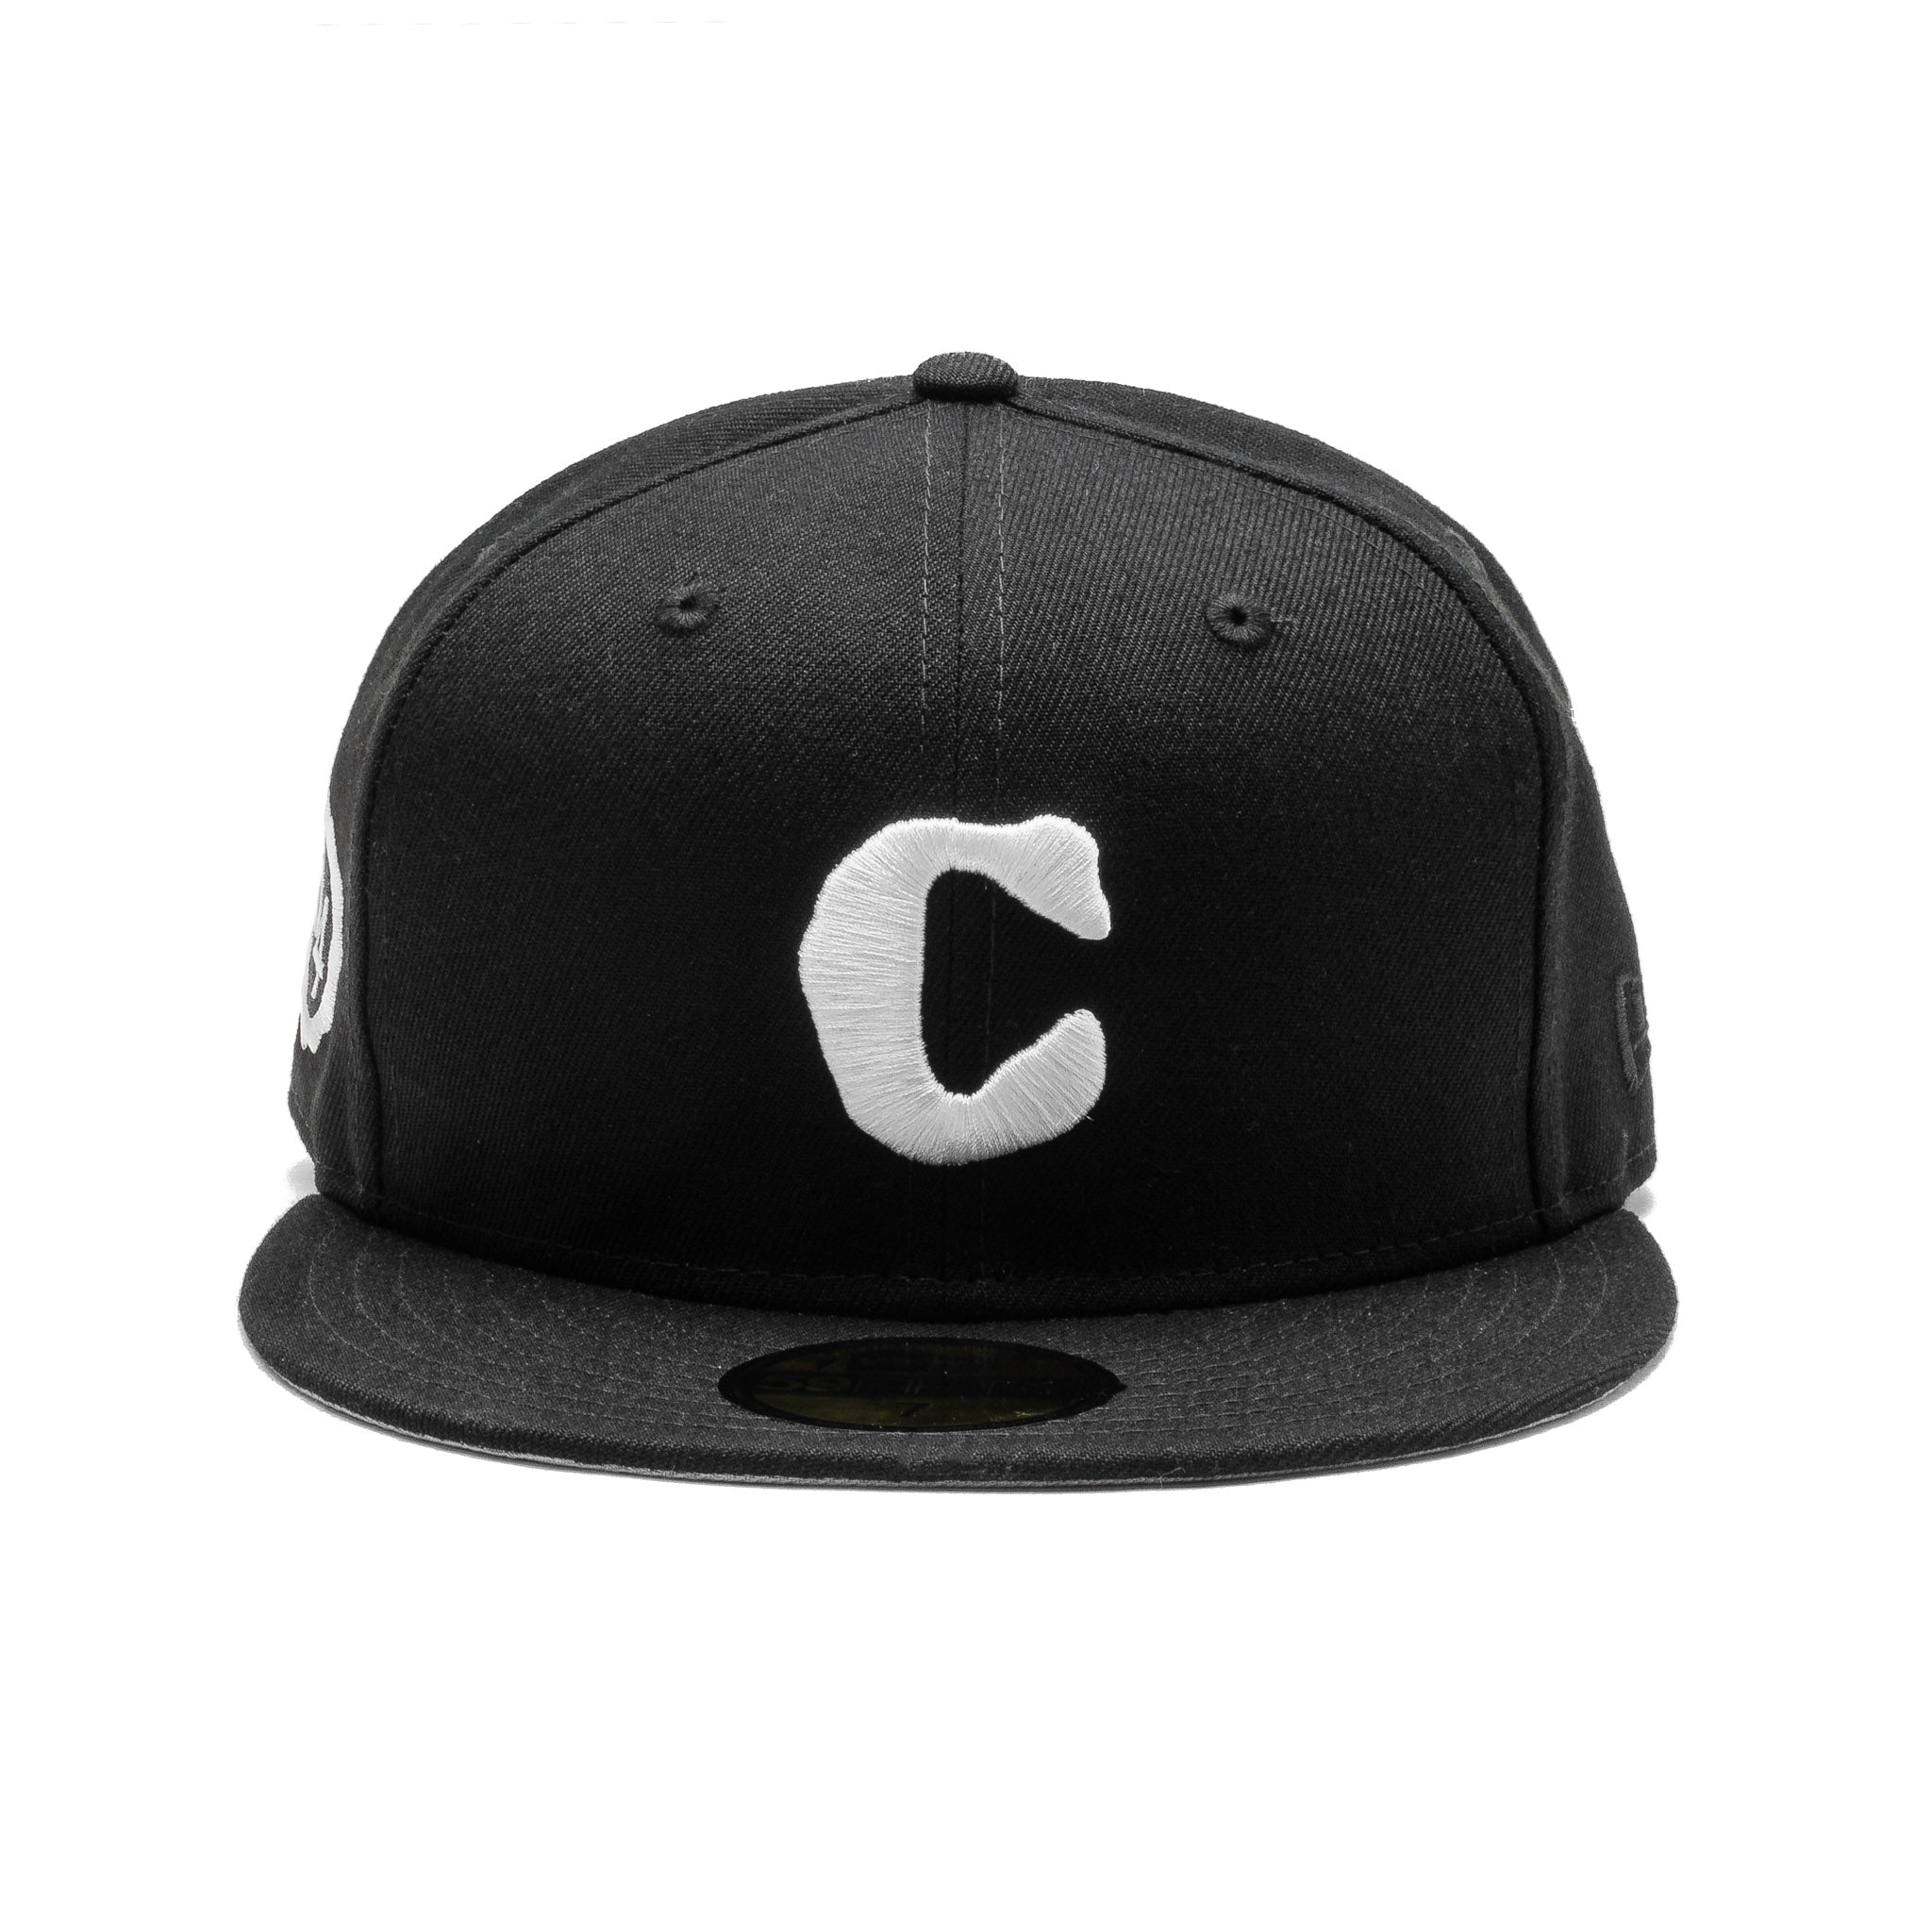 JmksportShops Casper Logo x New Era Fitted Cap Black